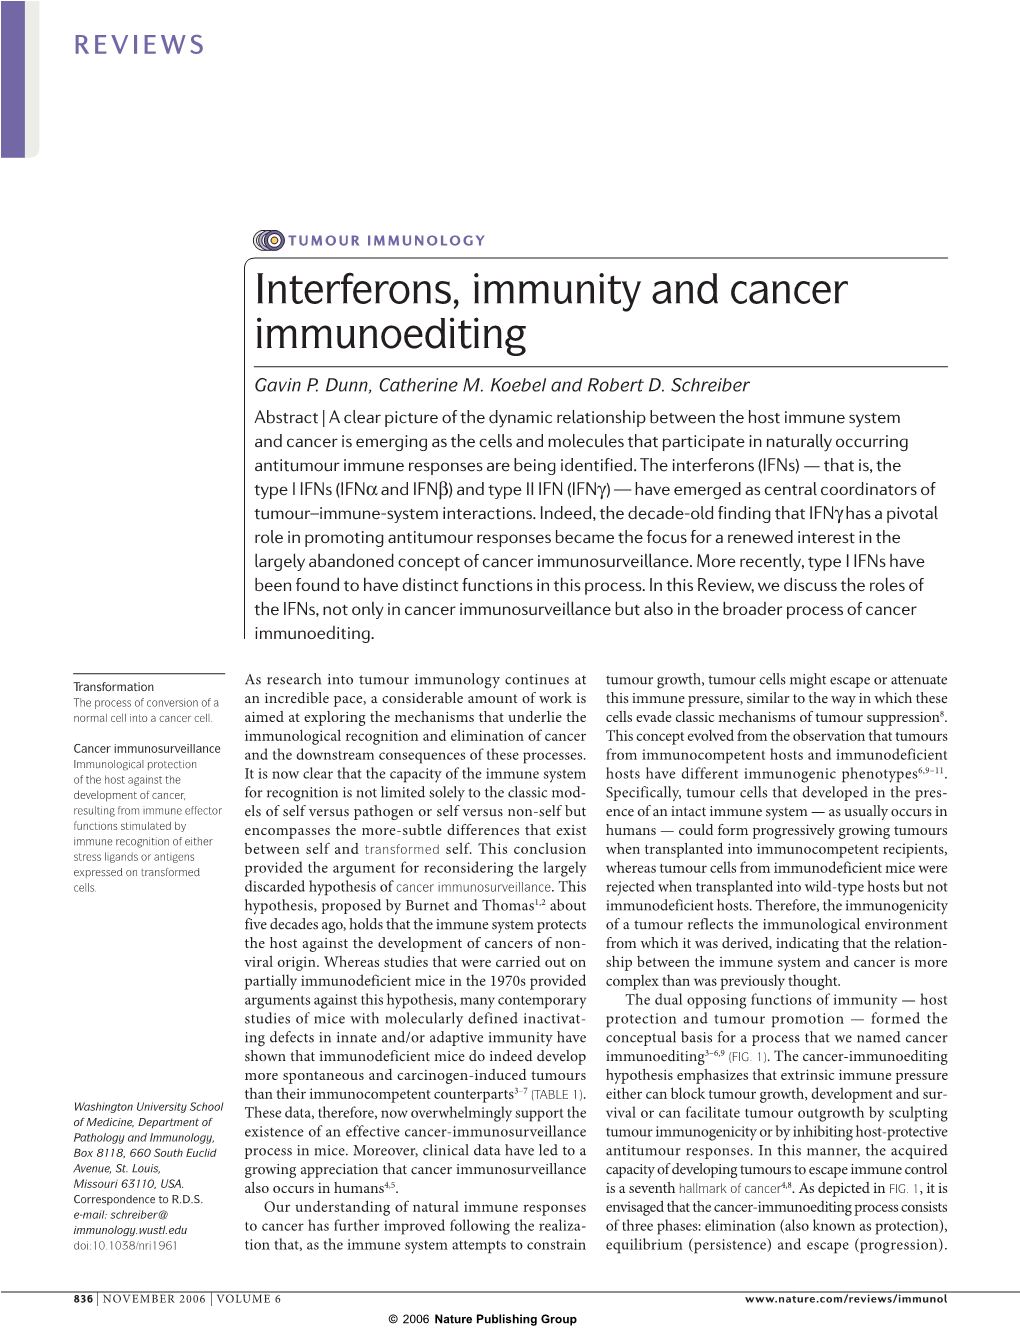 Interferons, Immunity and Cancer Immunoediting